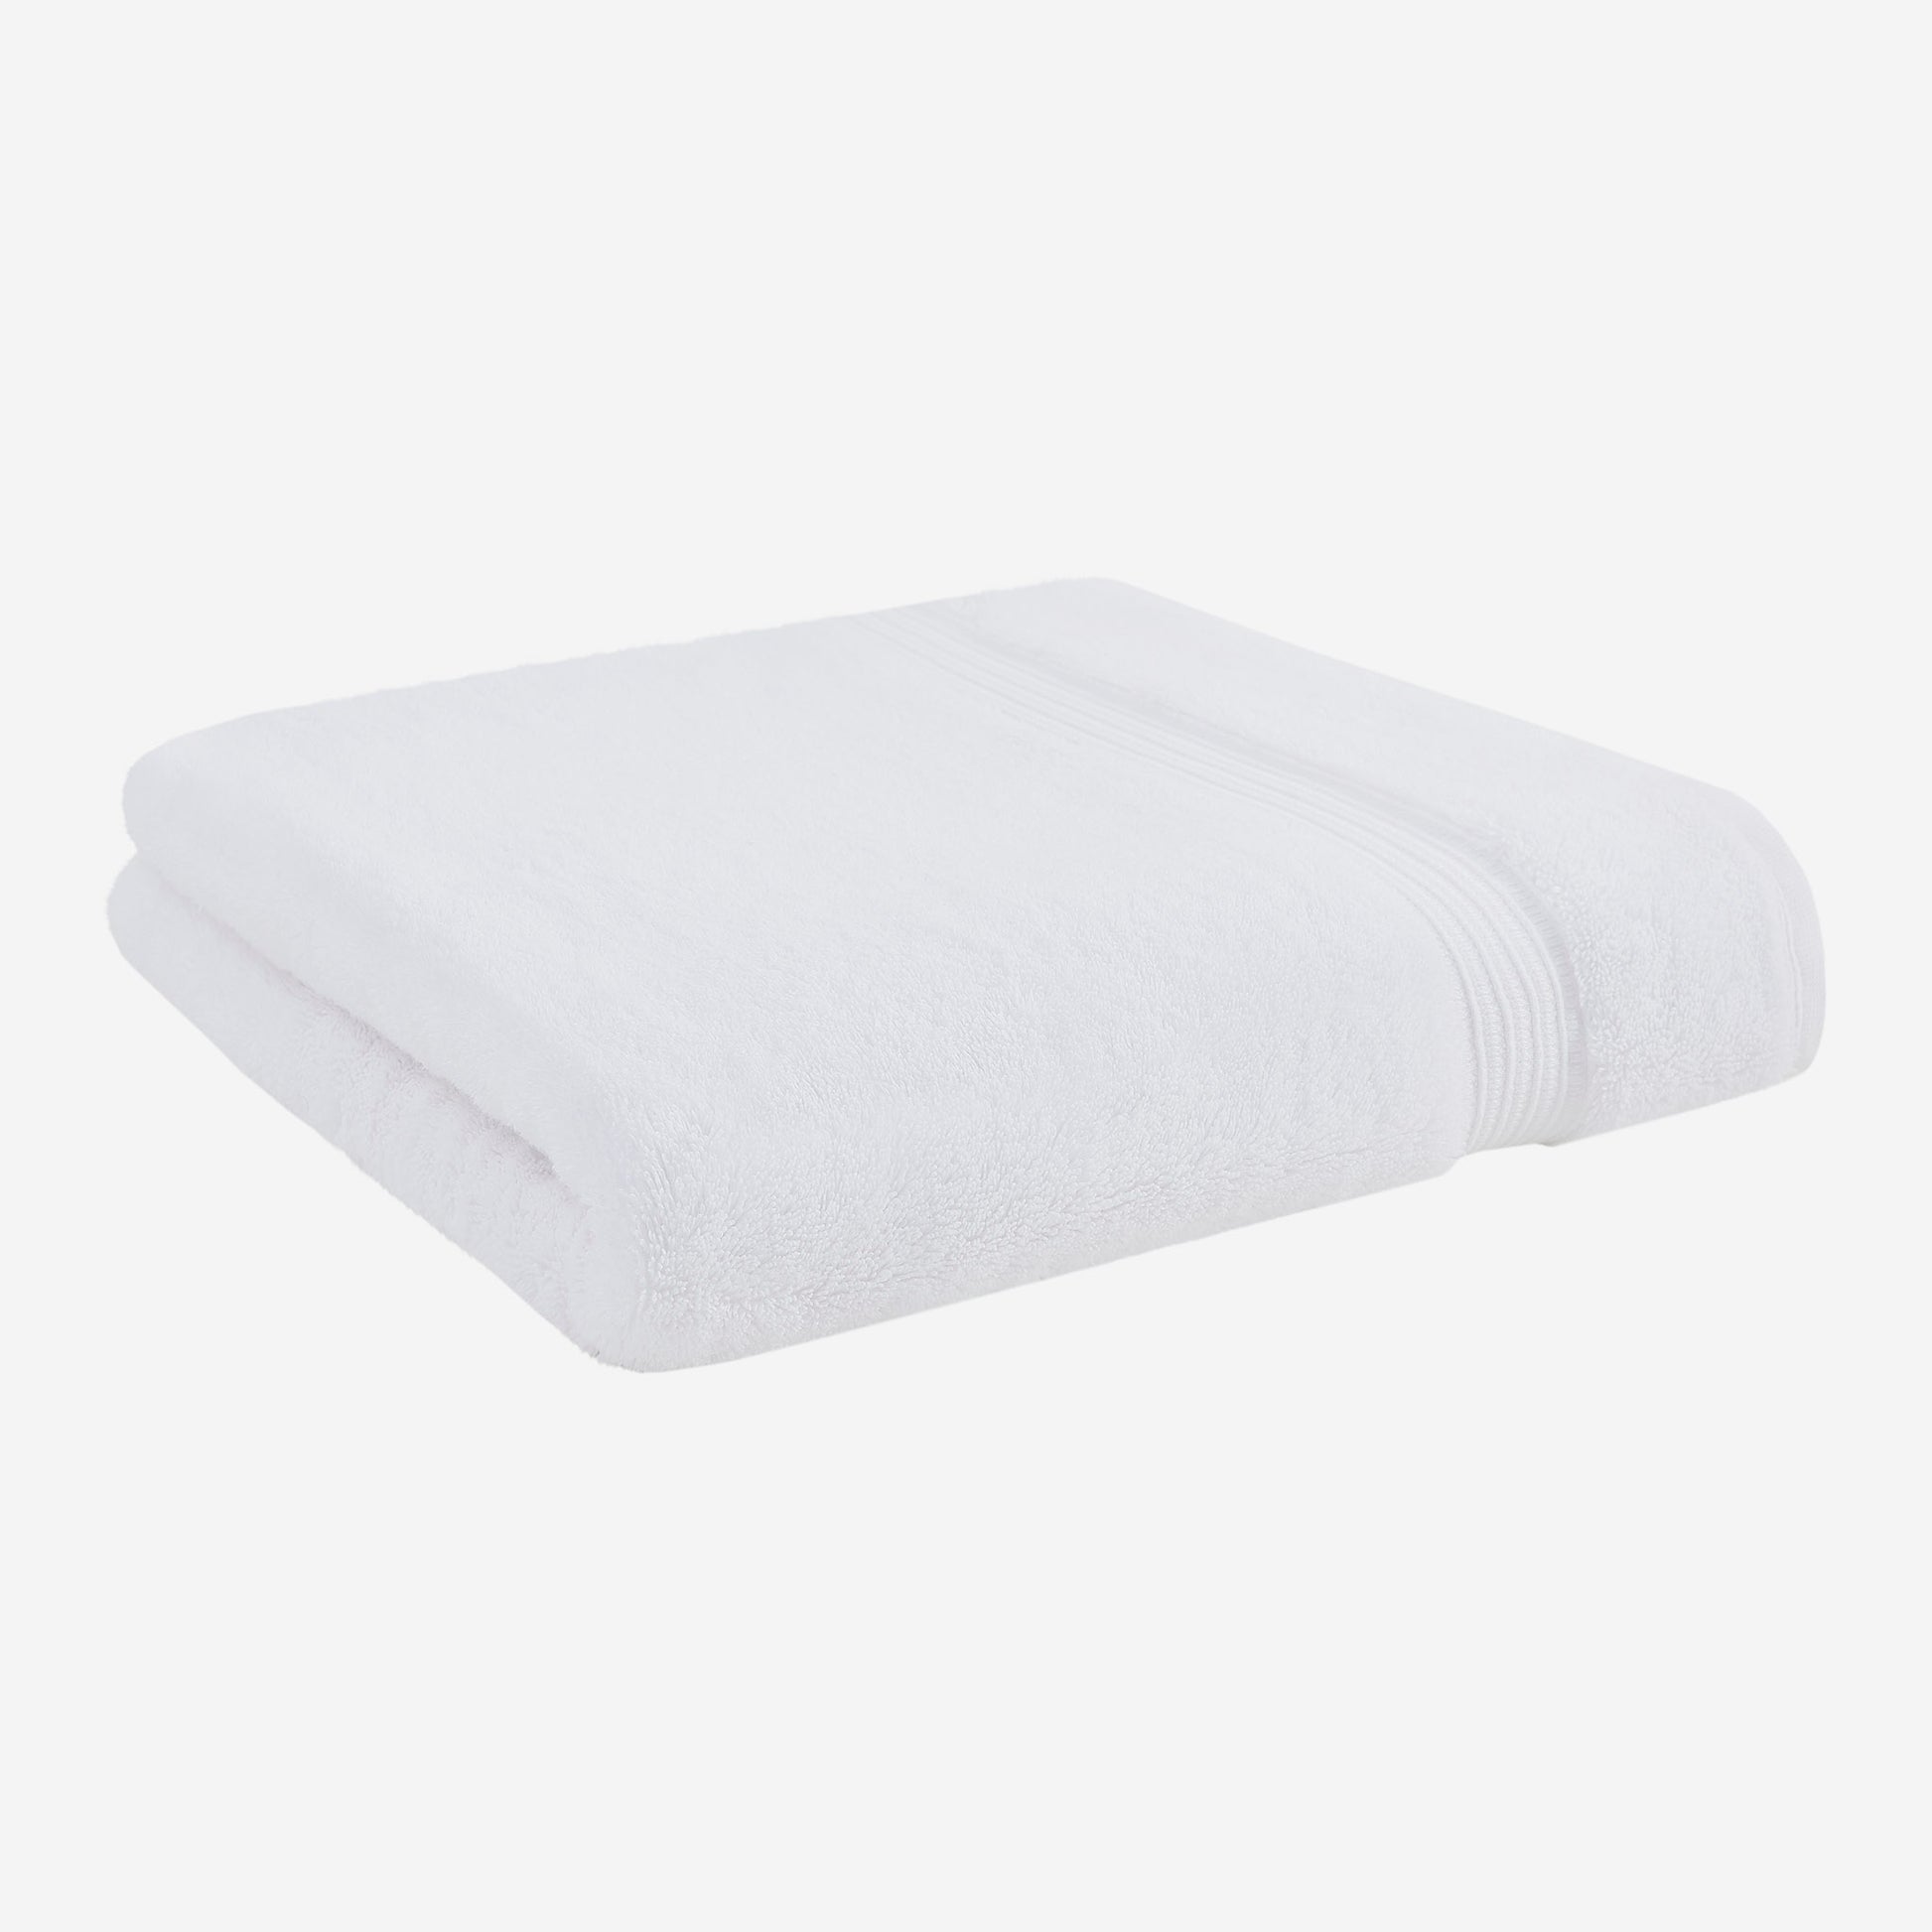 Croscill - Adana Ultra Soft Turkish Towel - Bath - Grey